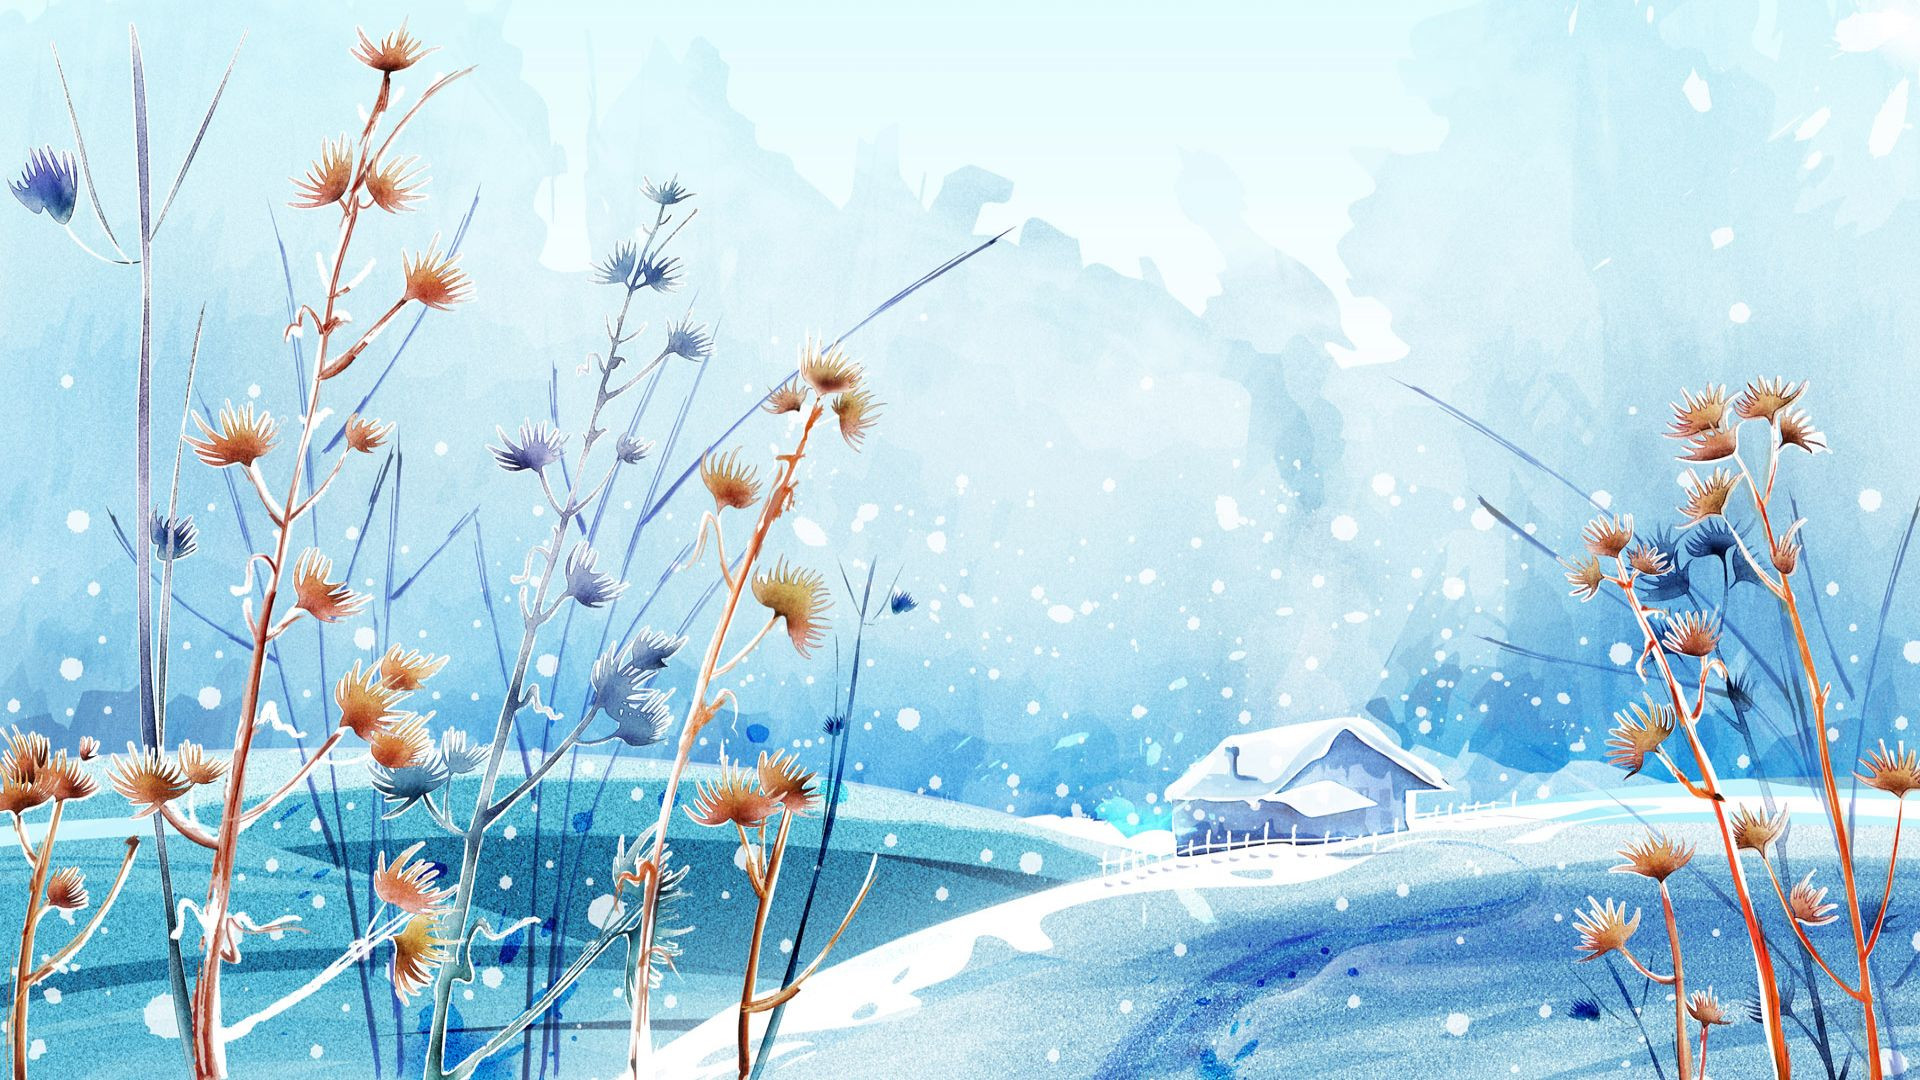 1920x1080, Winter Desktop Wallpapers Galerie Pic Wpw507871 - Beautiful Winter Background Png - HD Wallpaper 